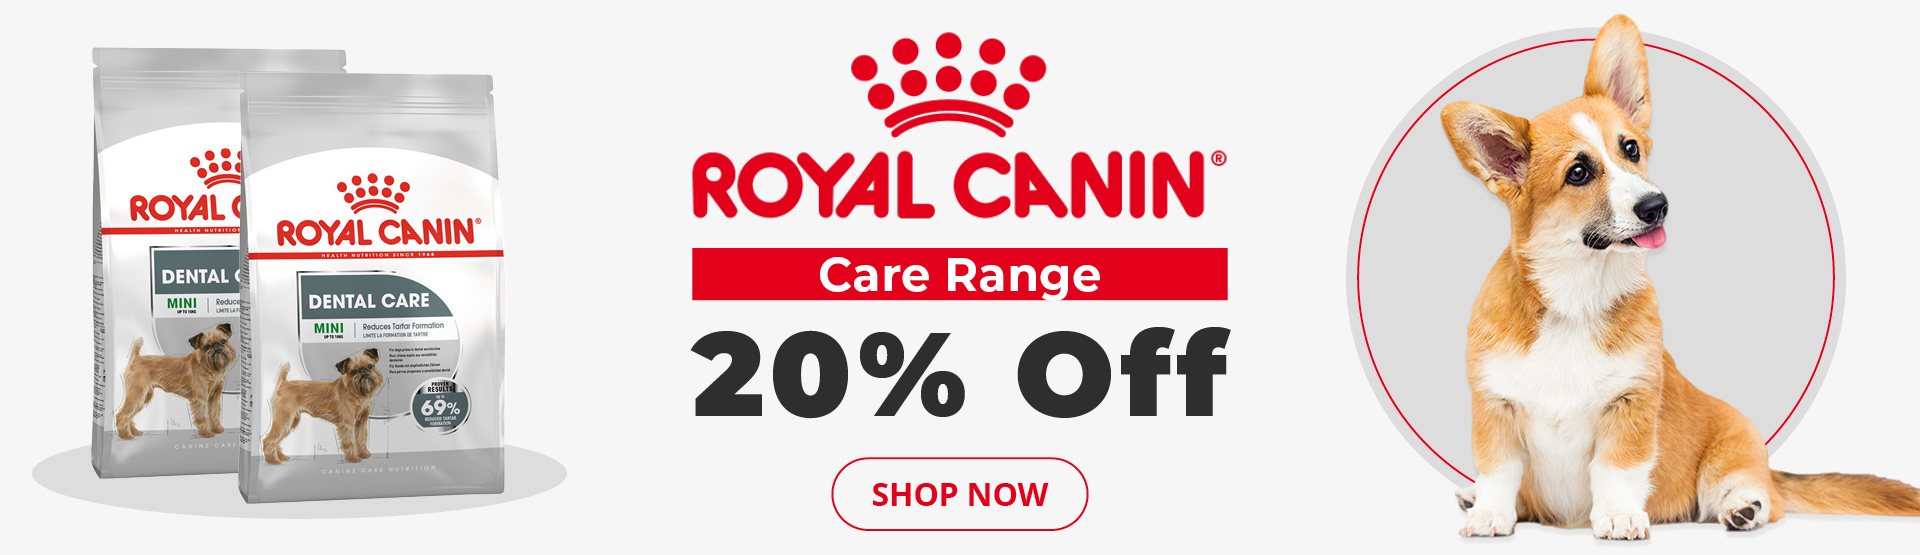 Royal Canin Care Range 20% Off